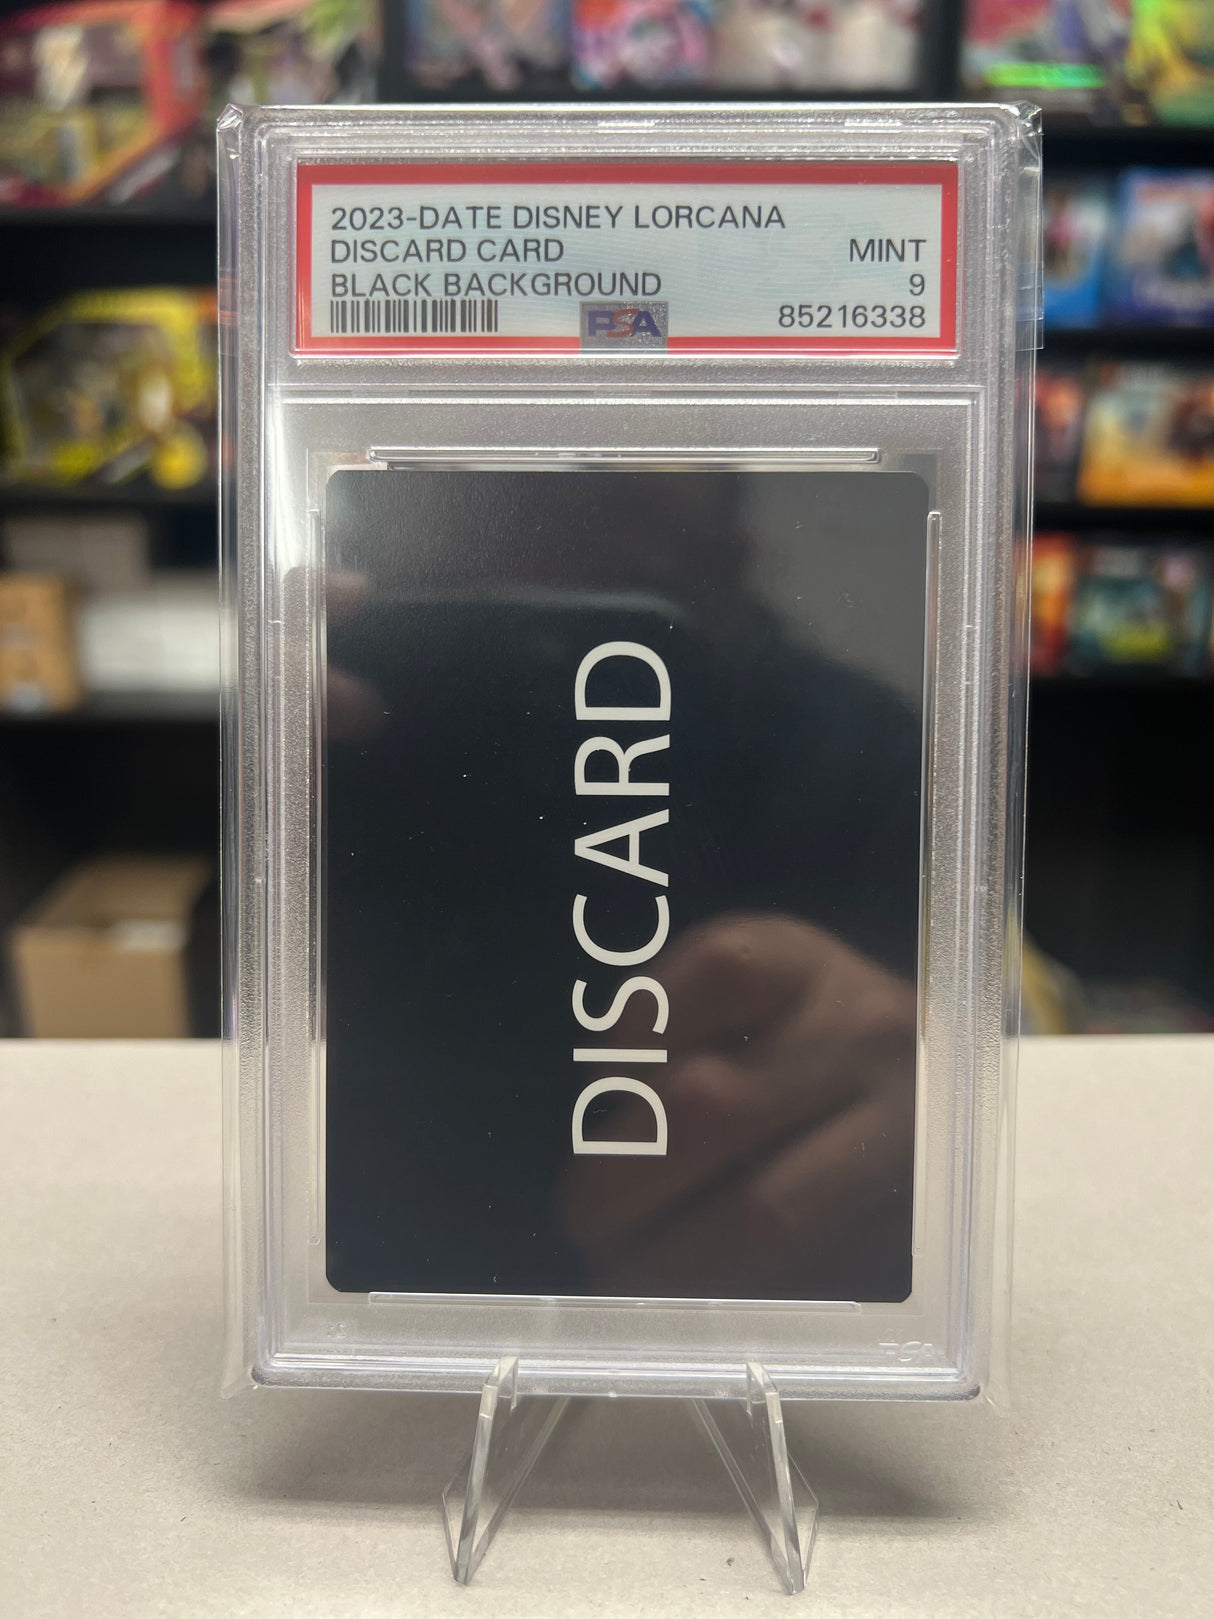 "Discard" Error - [Graded PSA 9] Disney Lorcana 2023